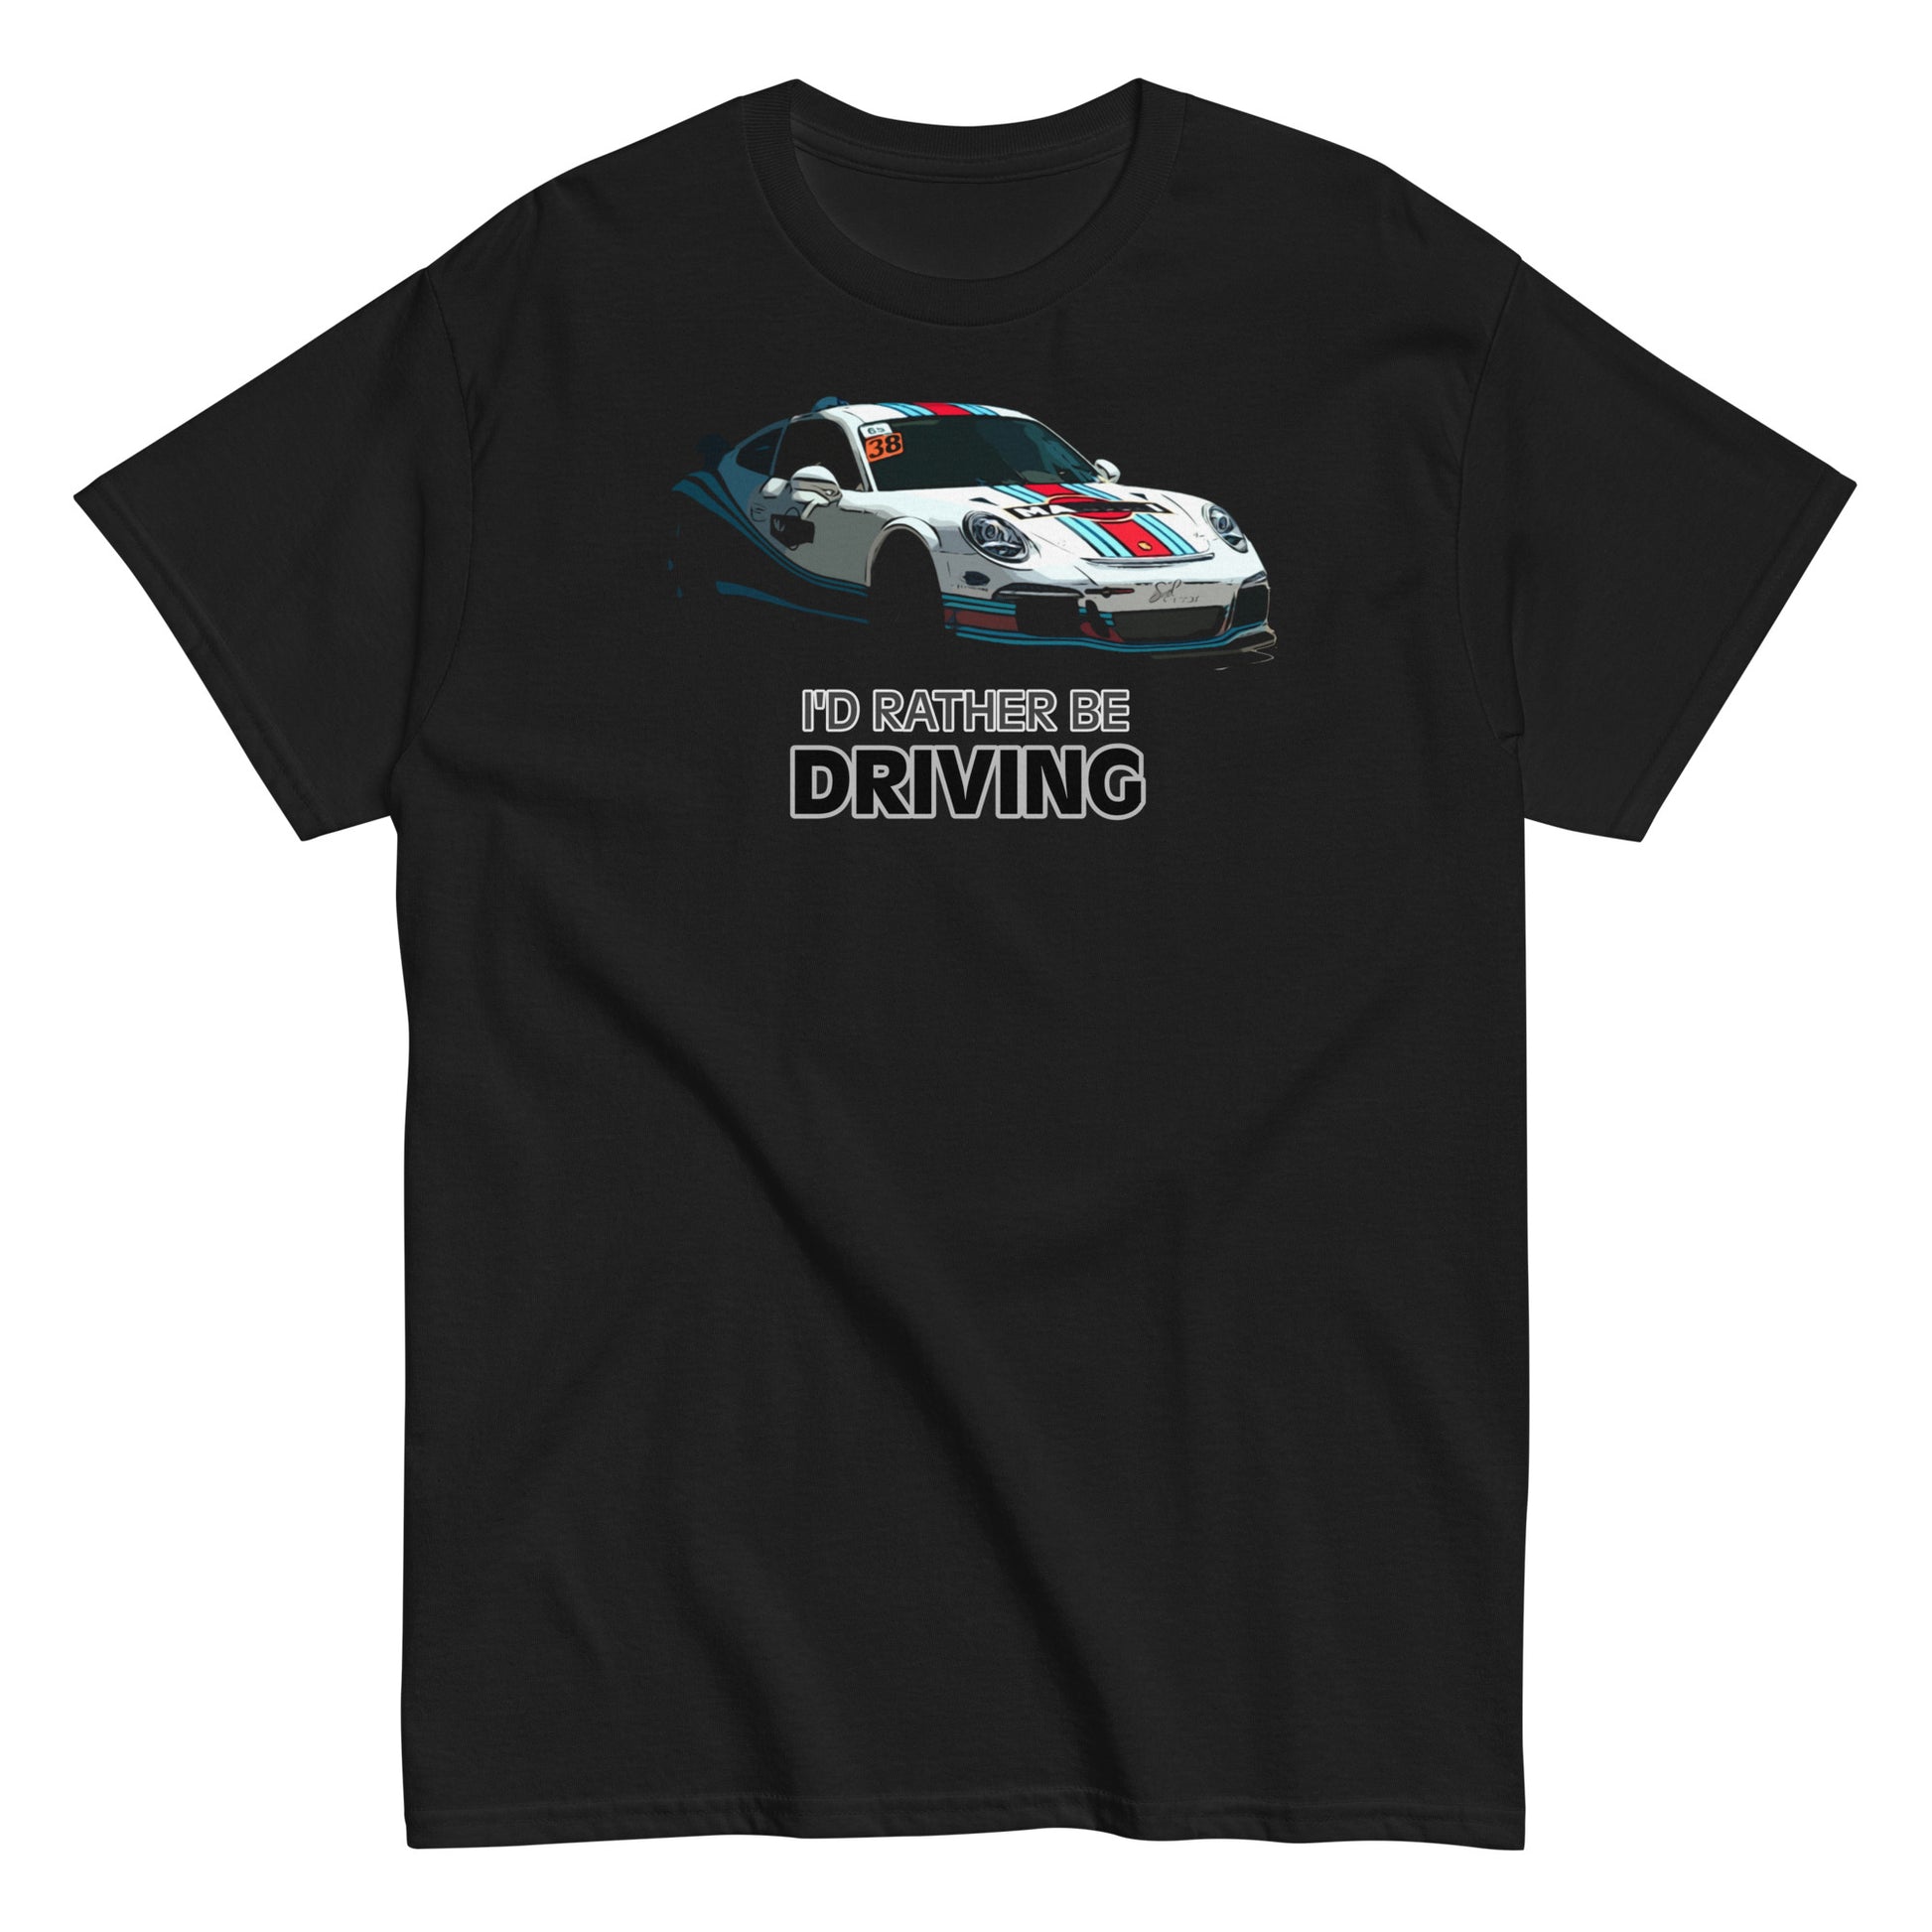 I'd rather be driving a Porsche t-shirt in black